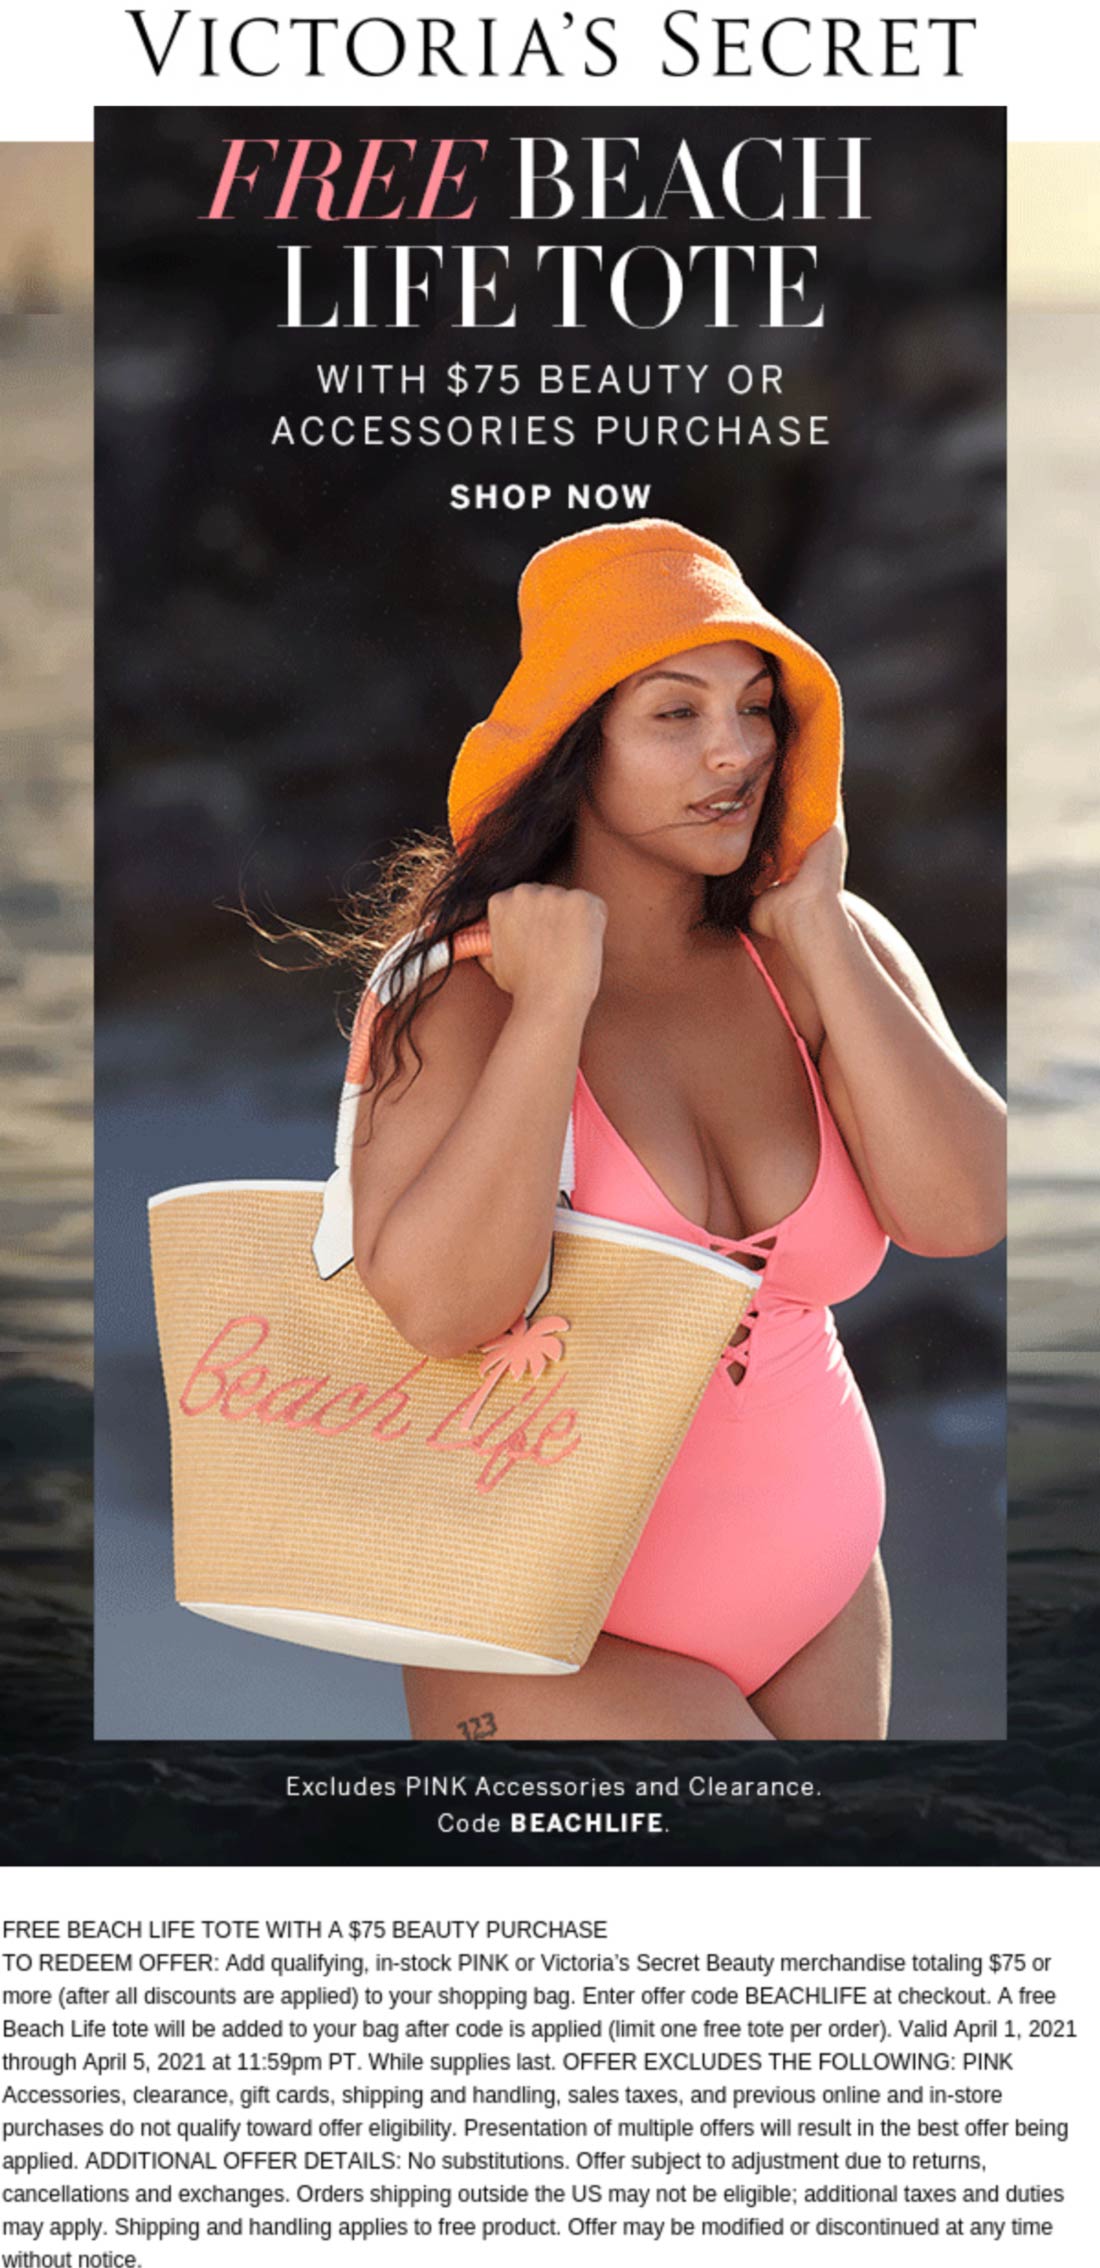 Free beach tote with 75 spent at Victorias Secret via promo code